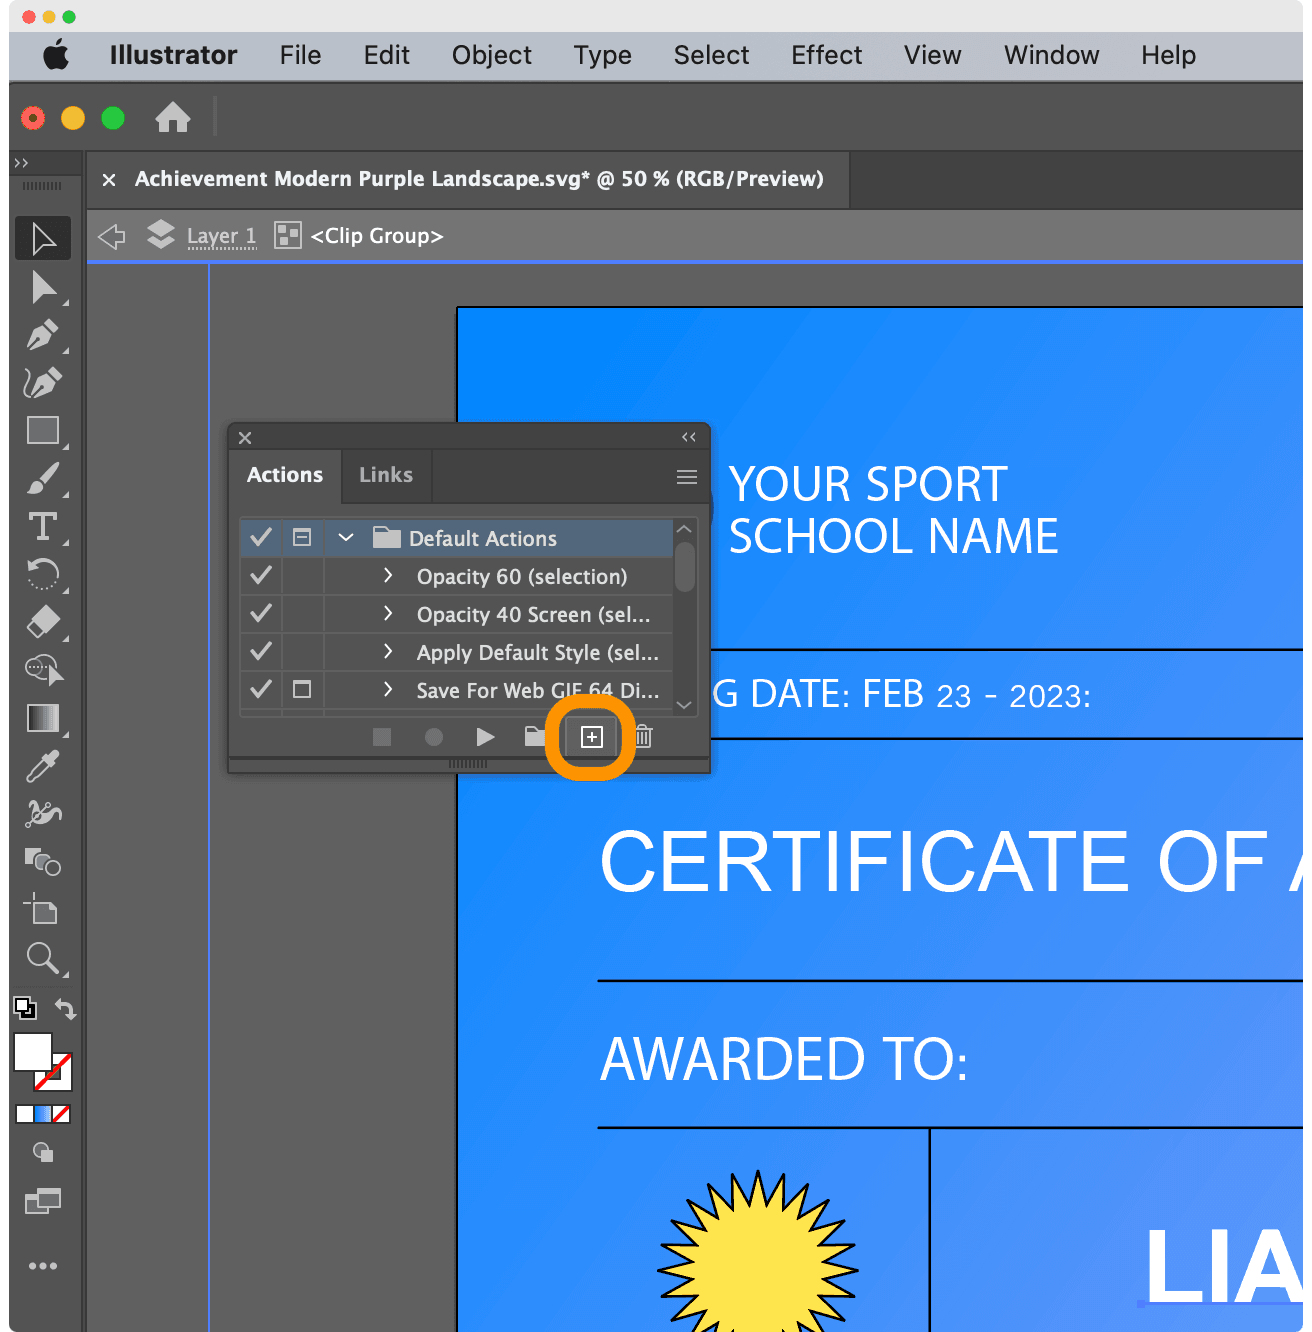 Recording new action in Adobe Illustrator to generate certificates in bulk.